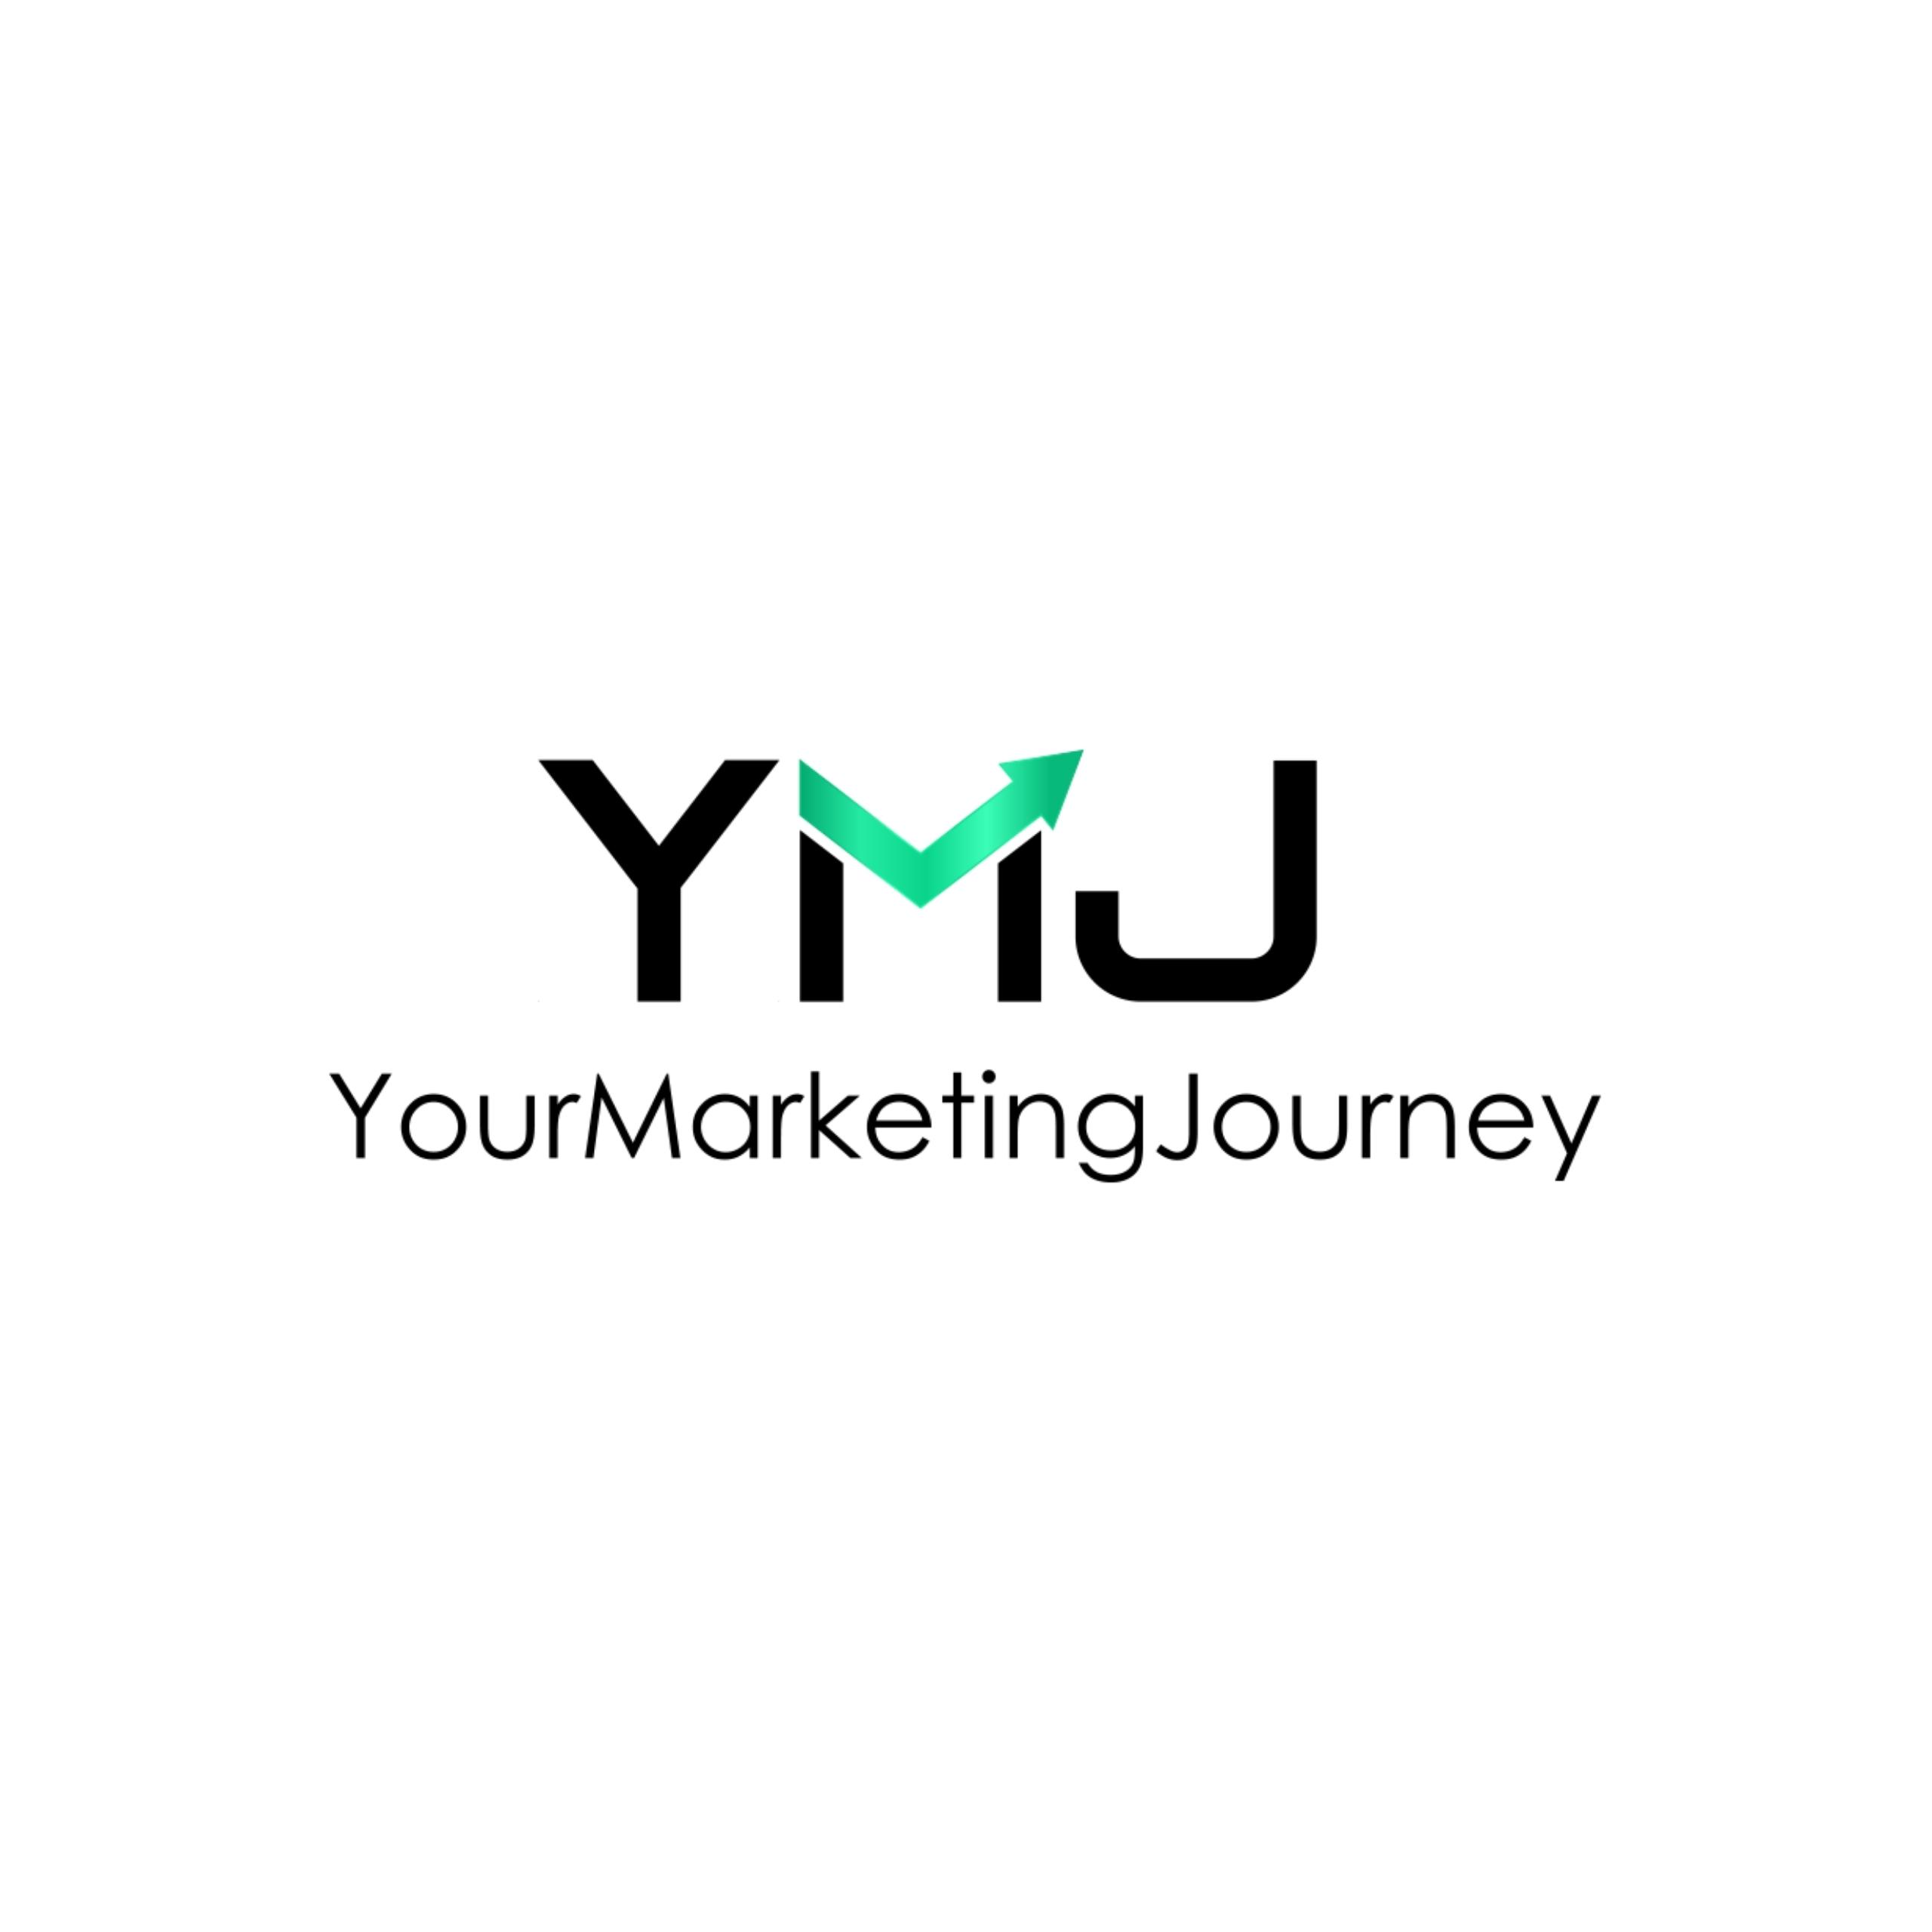 Your Marketing Journey